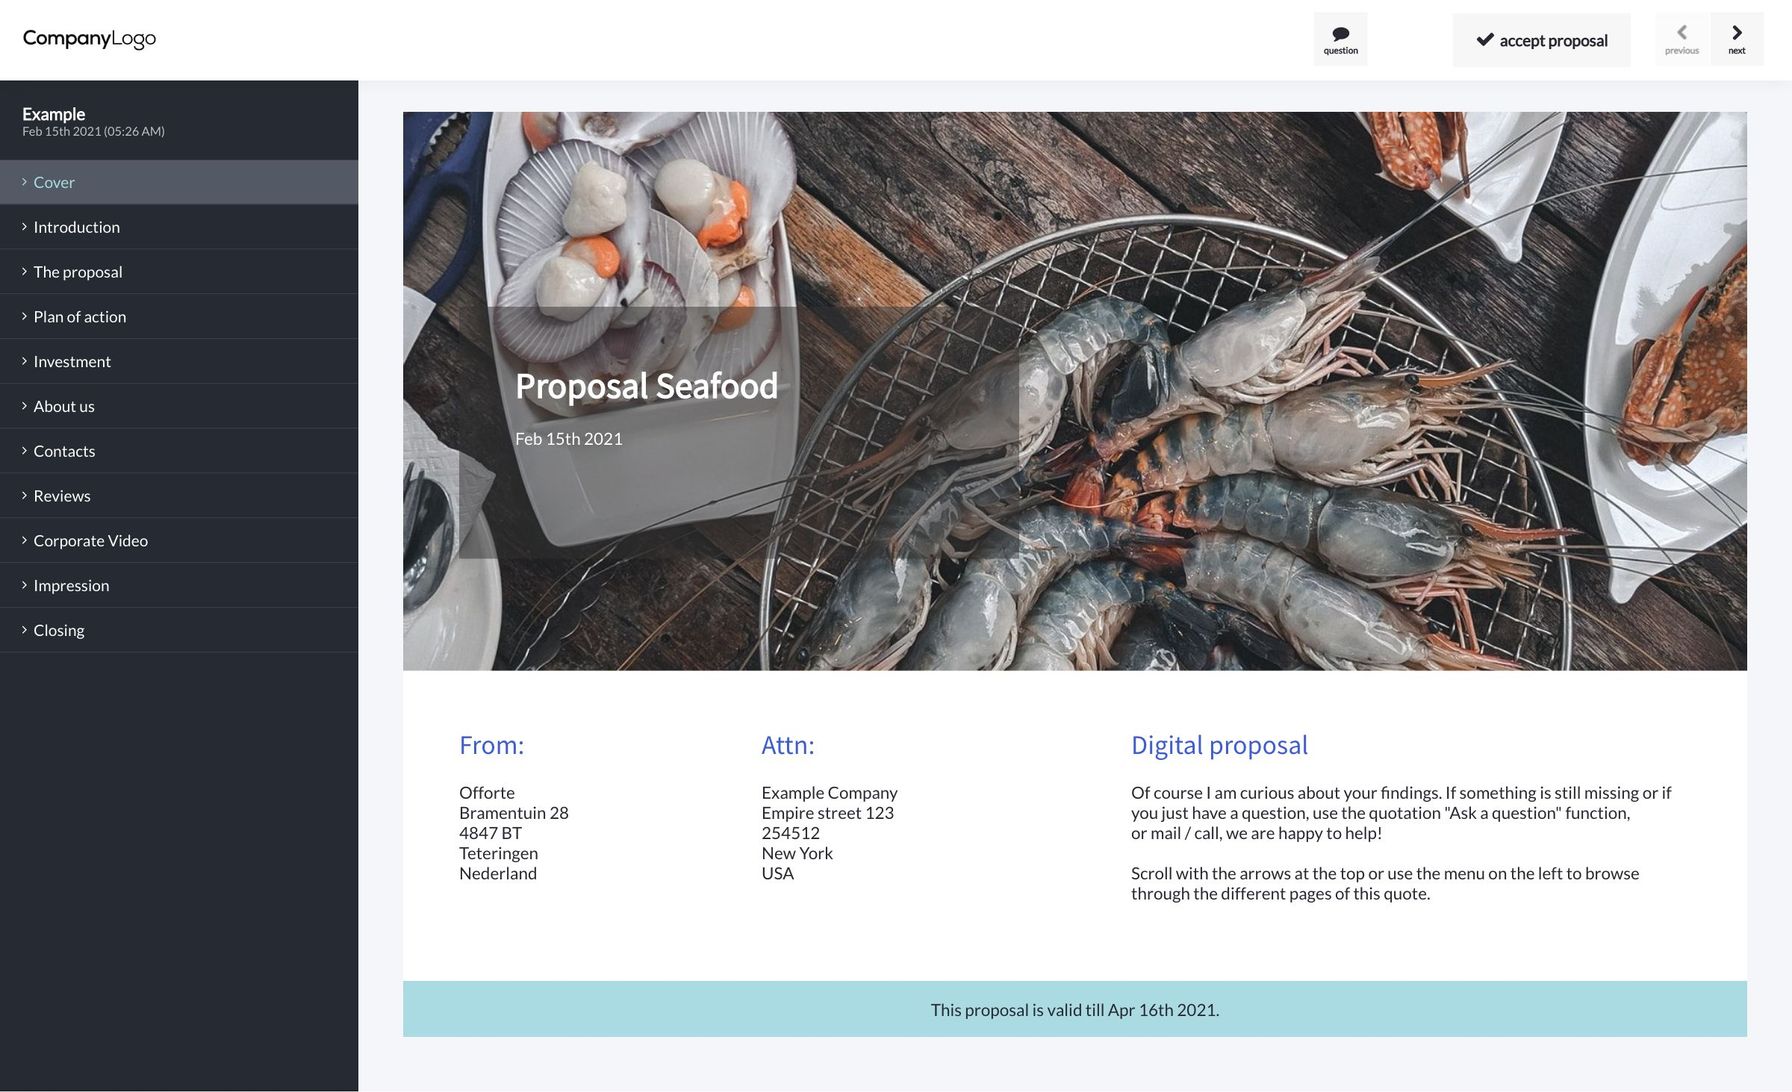 seafood business plan sample